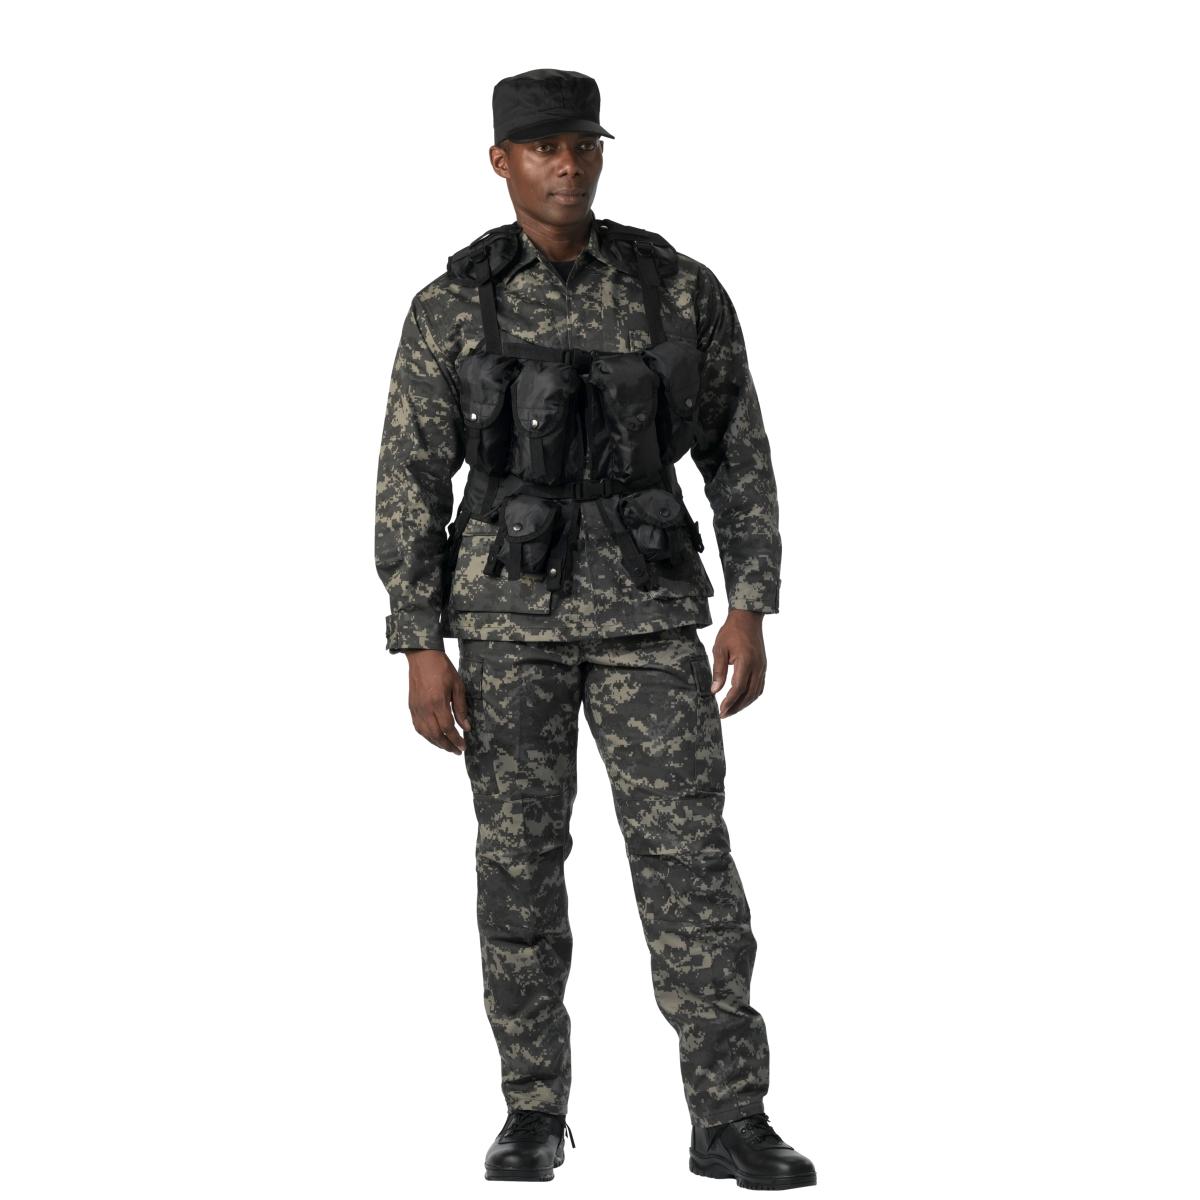 metal slug tactical vest